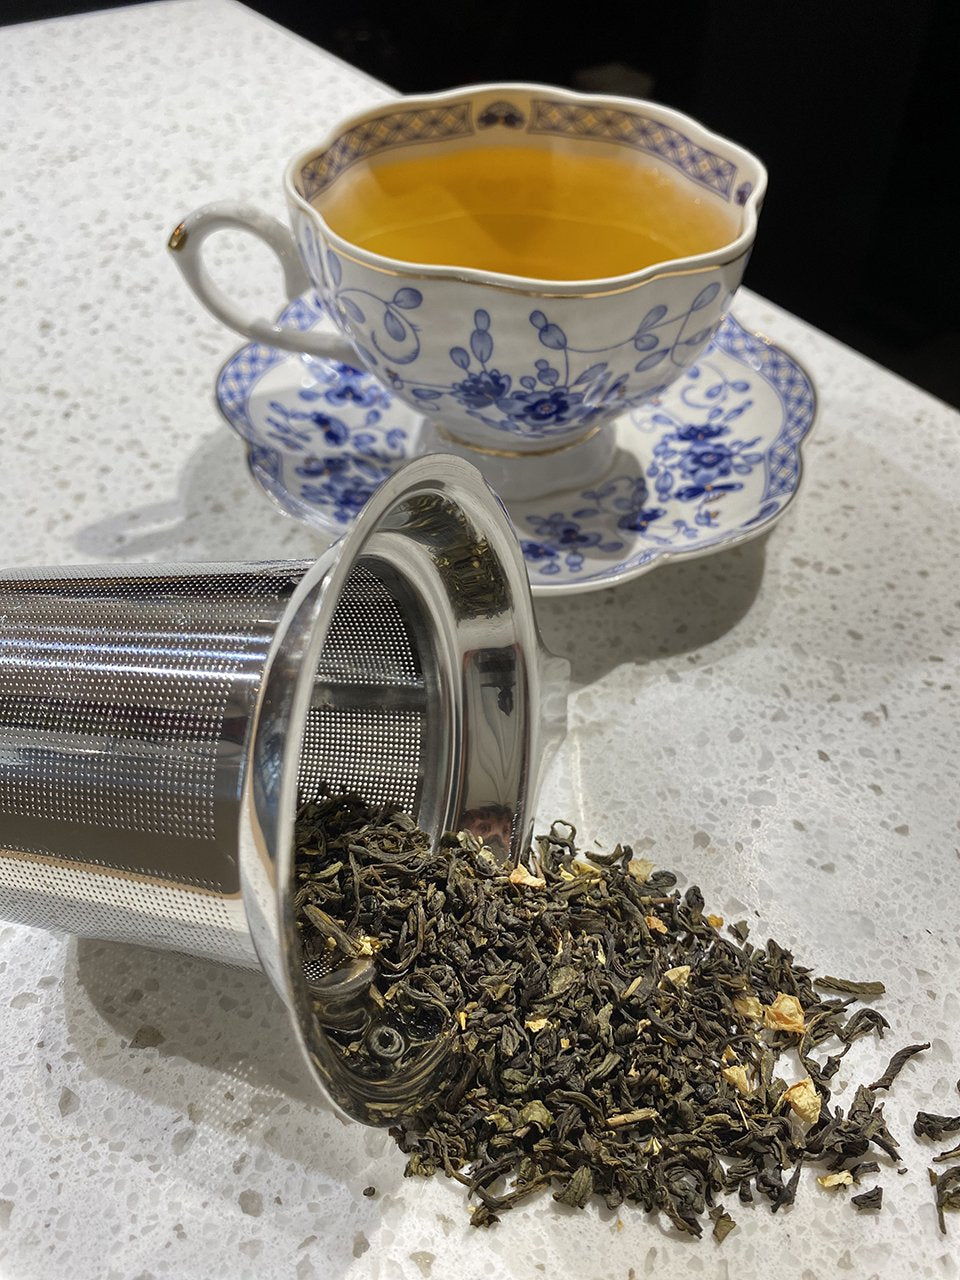 Awakening spring - Green tea, with jasmine flowers